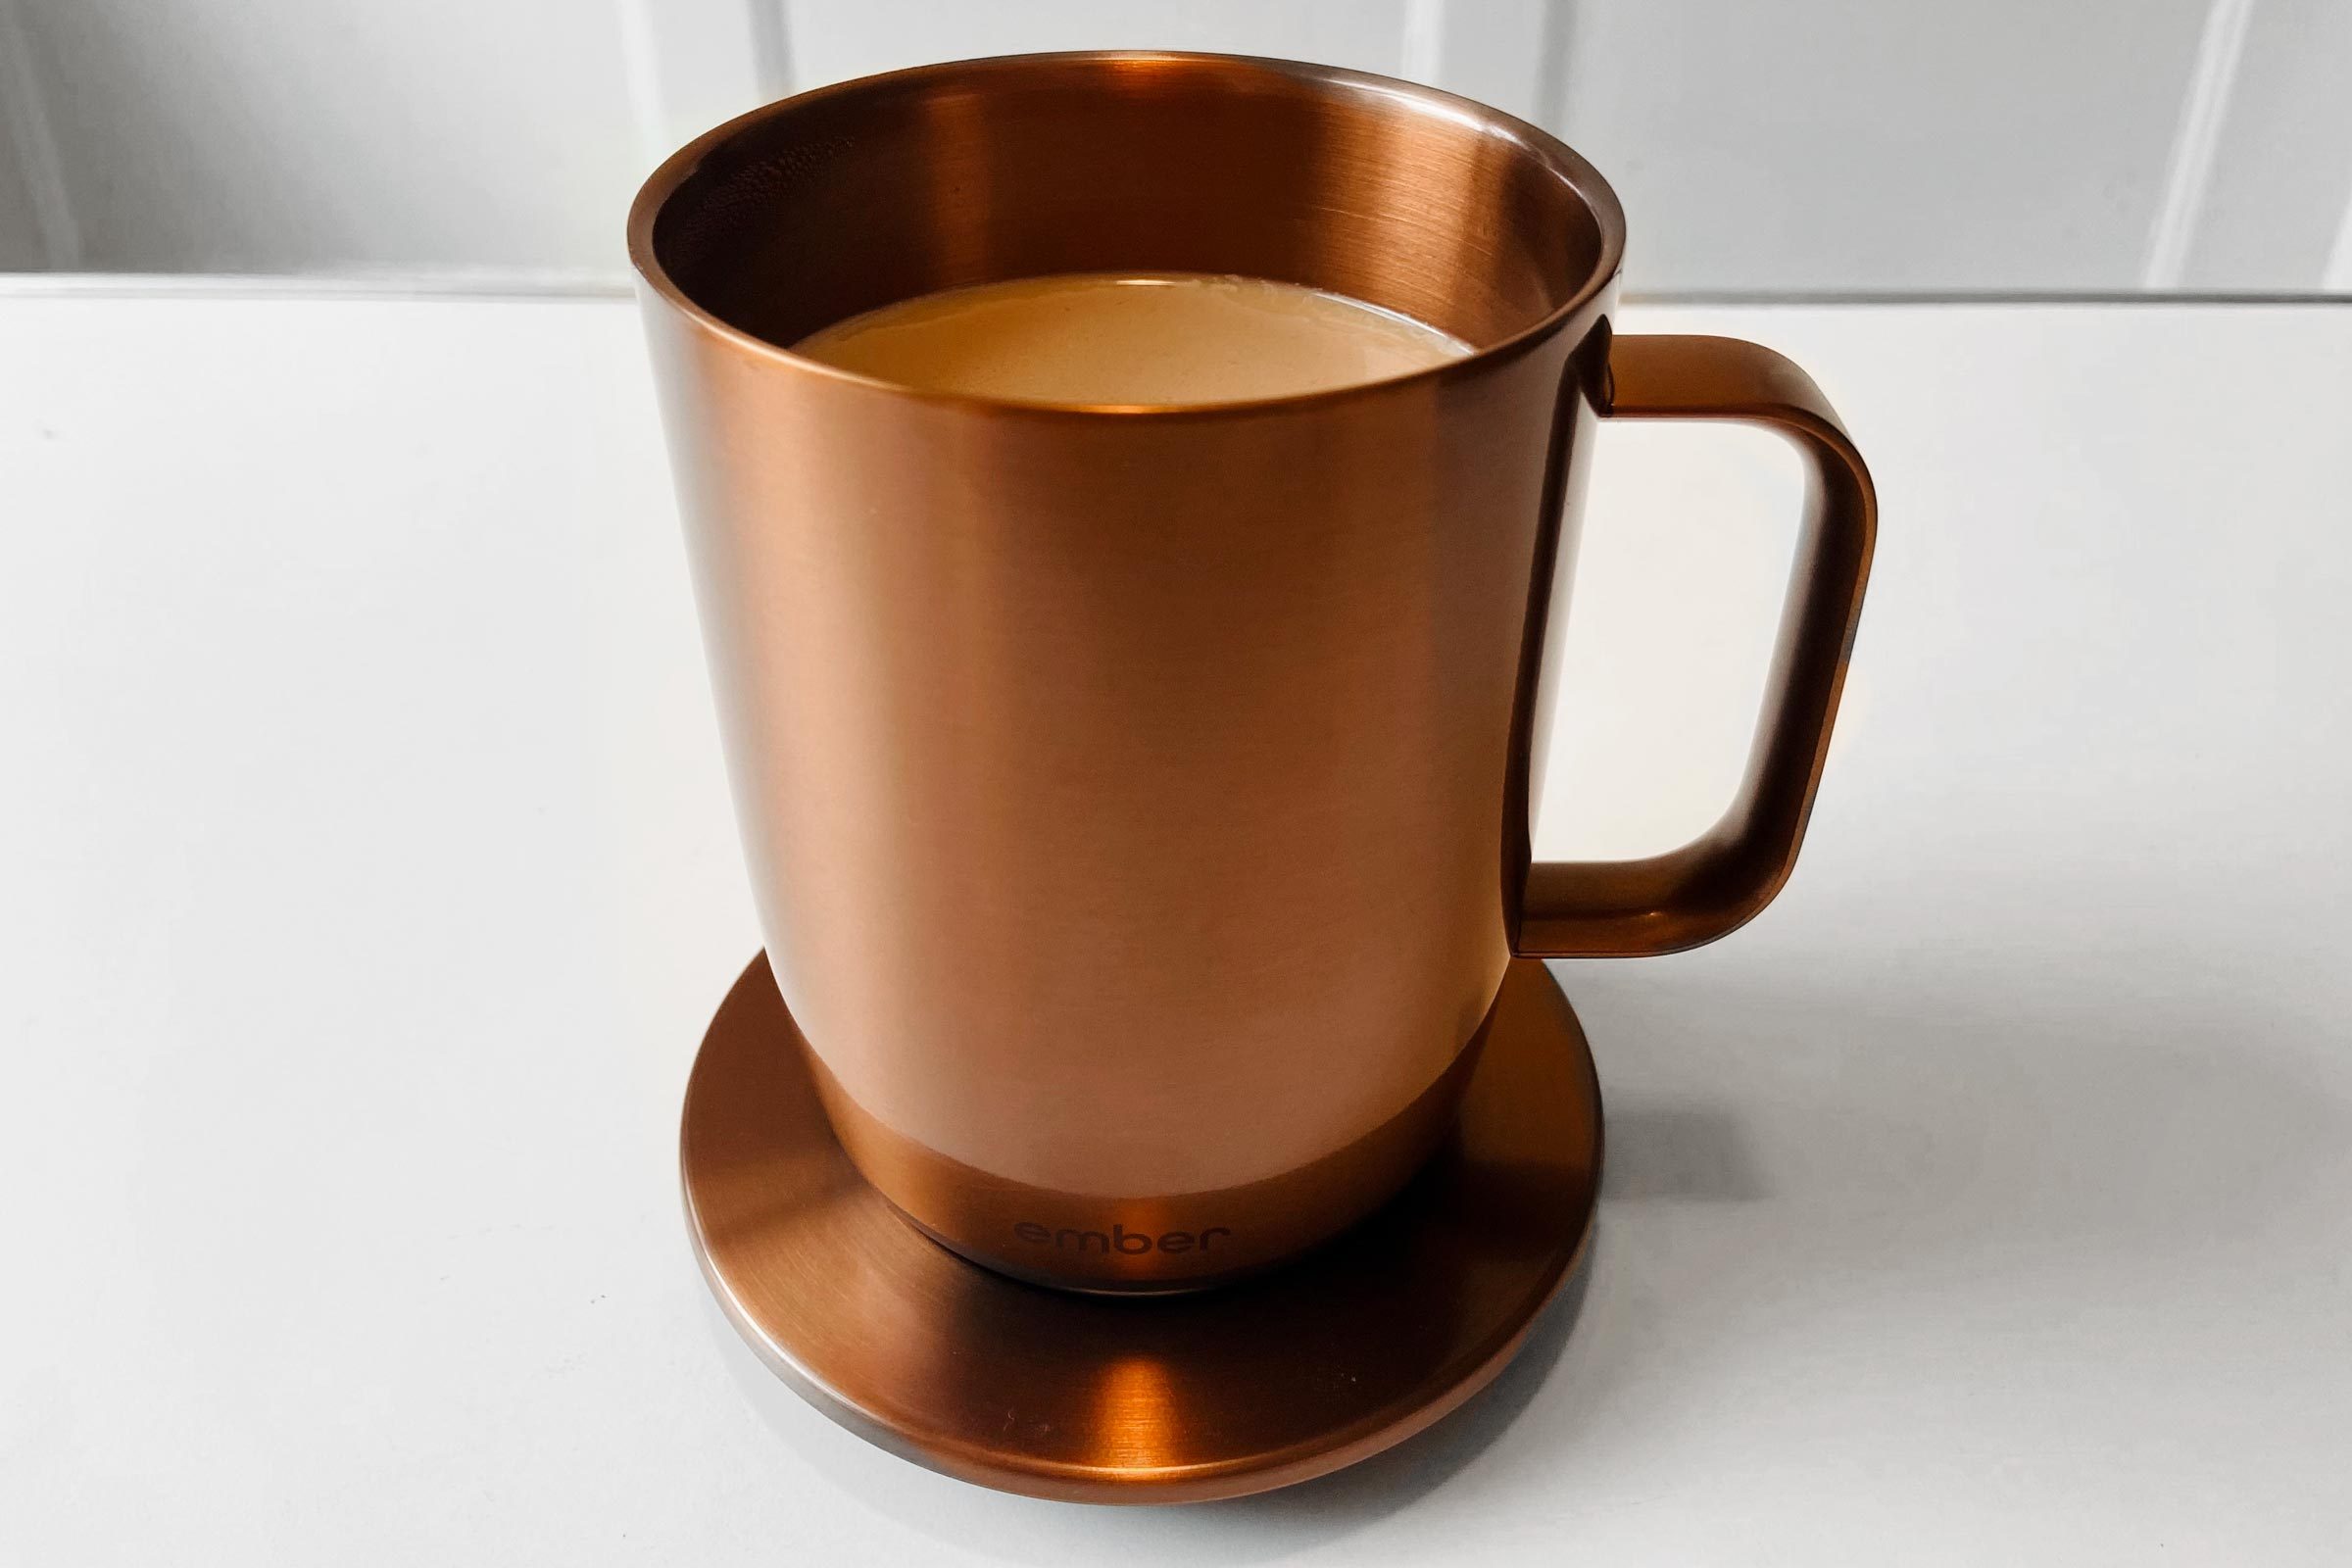 Ember Ceramic Mug Review 2019 - The Mug That Keep Coffee Hot Forever